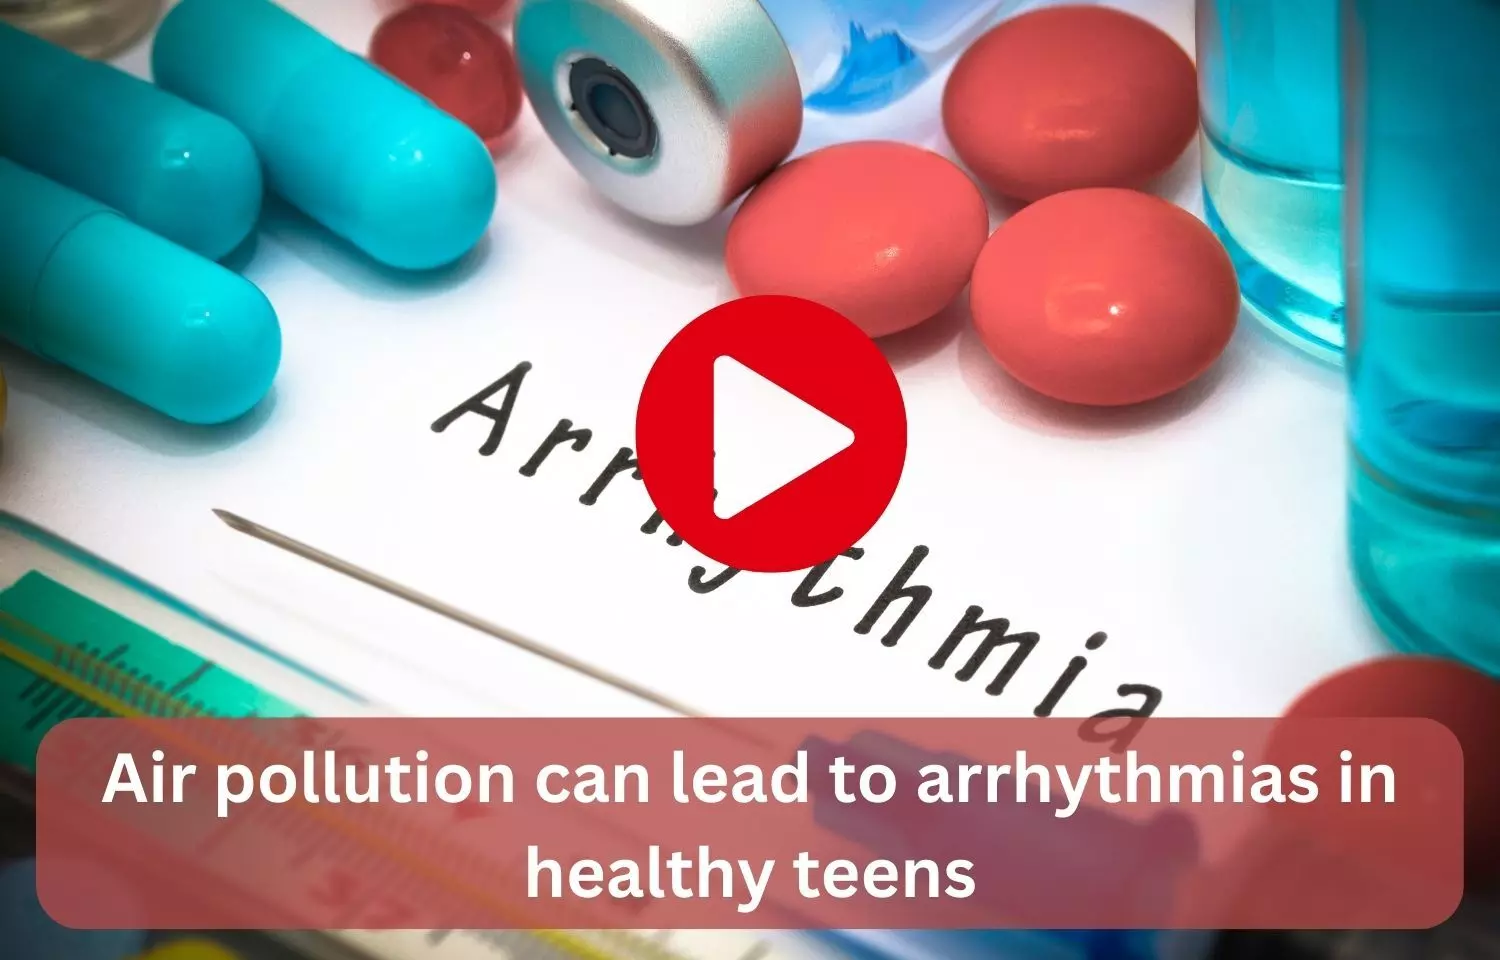 Air pollution can lead to arrhythmias in healthy teens